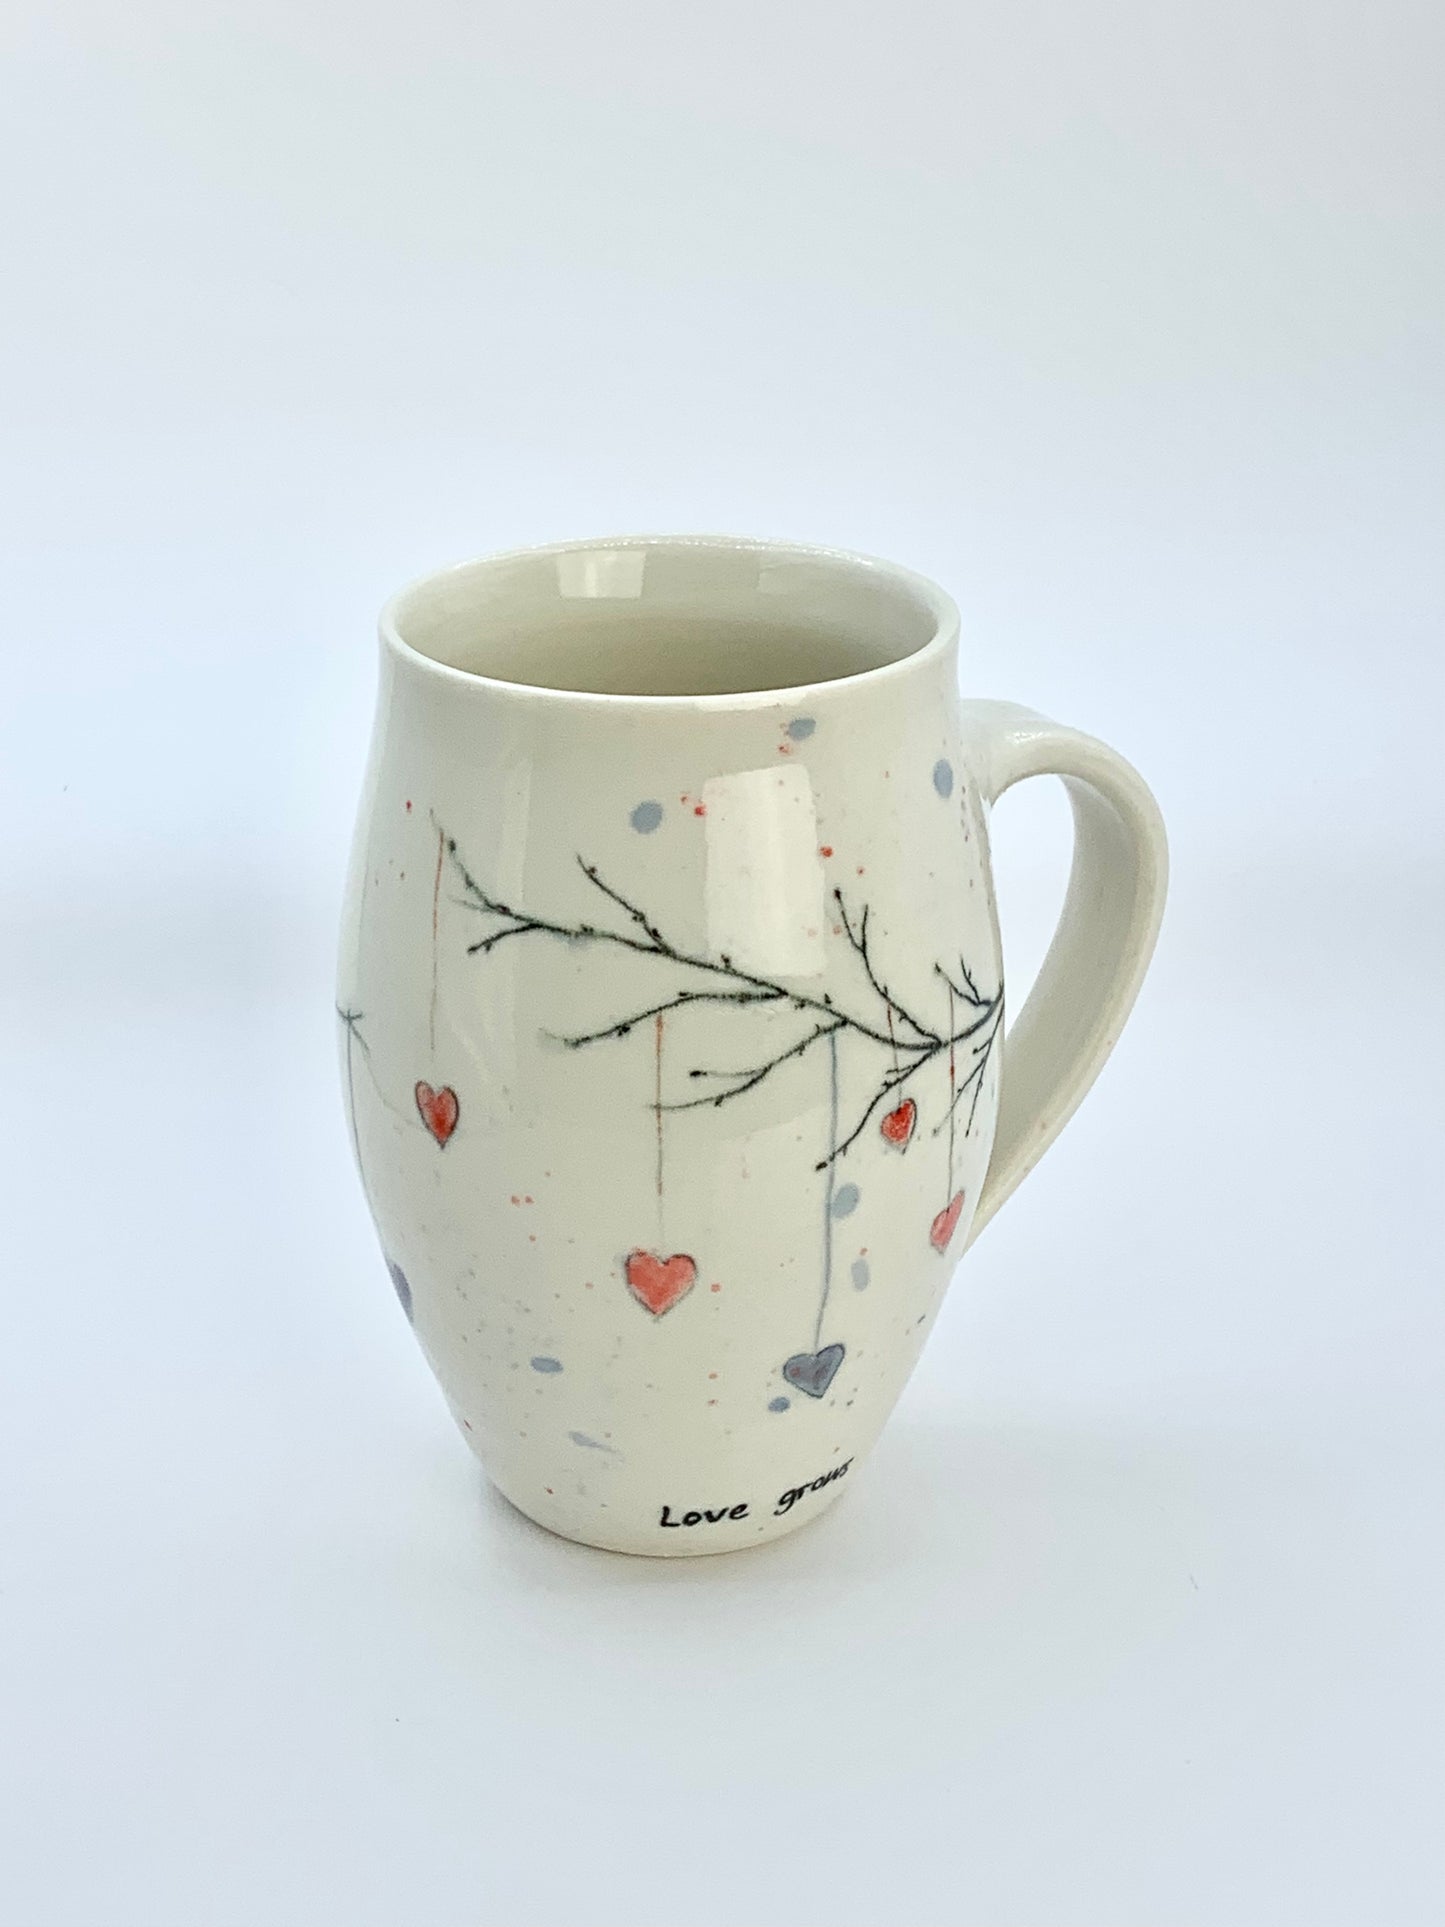 16 oz large porcelain mug with handpainted heart decorations